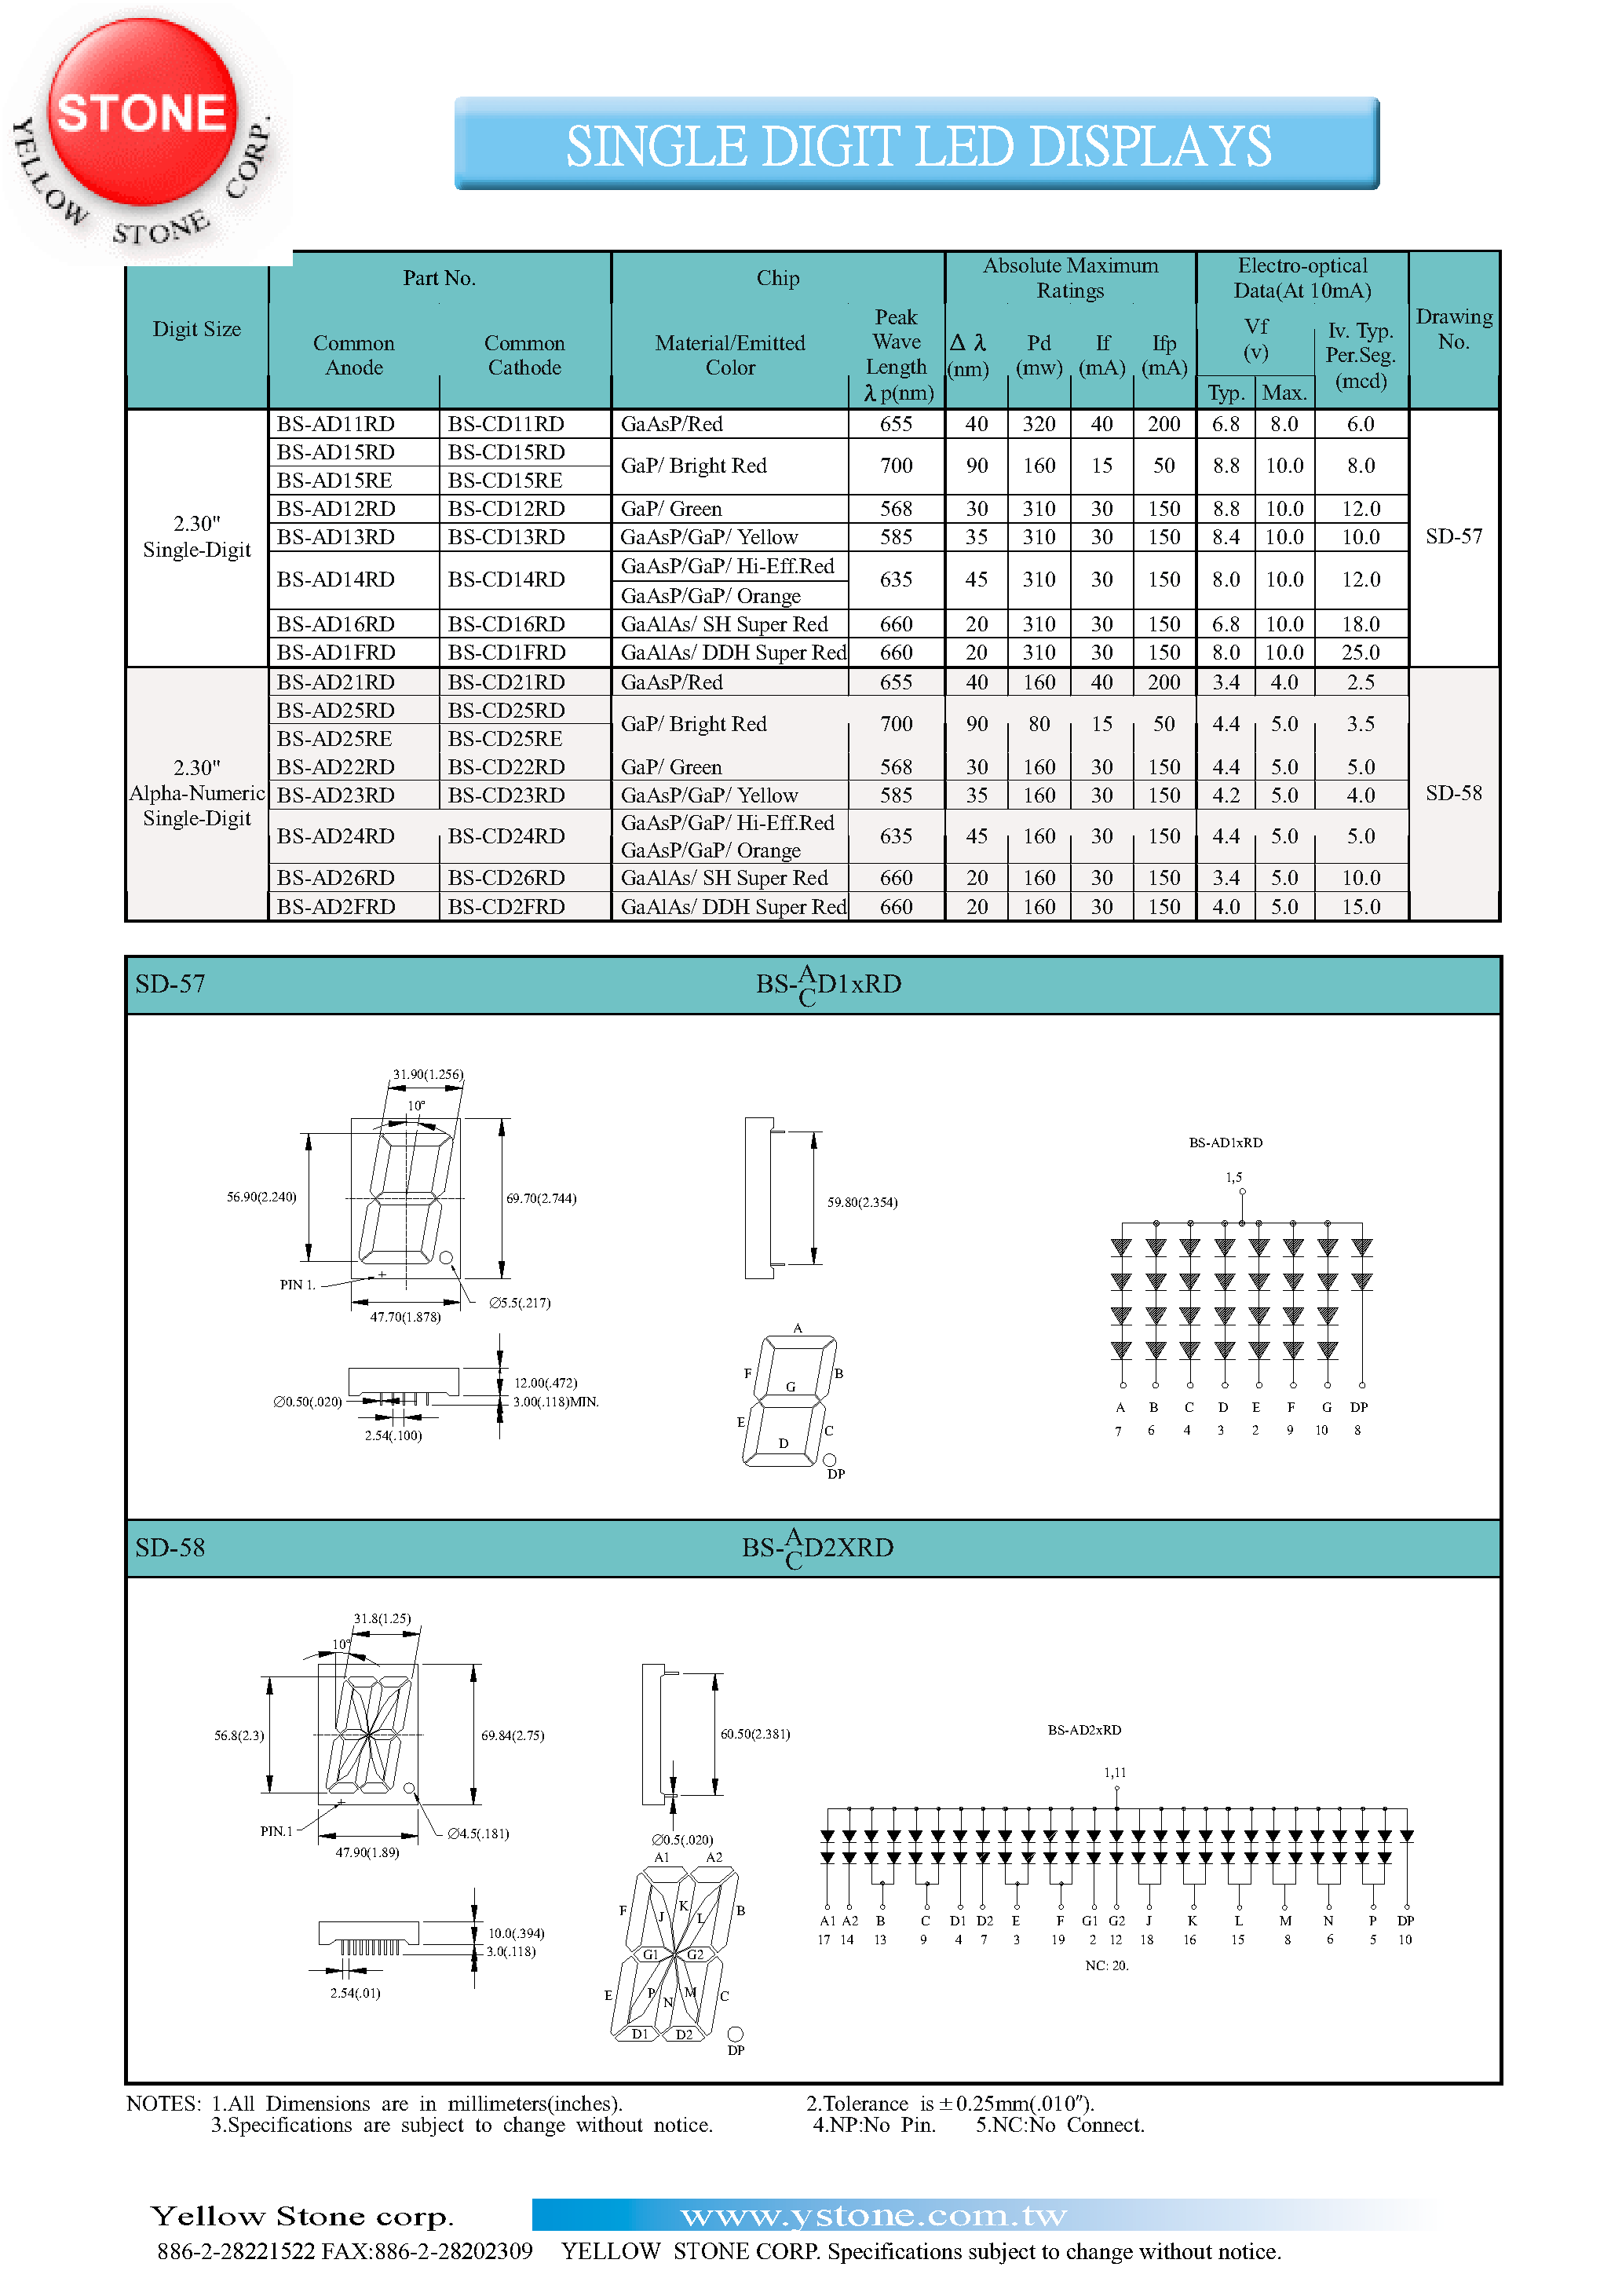 Datasheet BS-AD12RD - SINGLE DIGIT LED DISPLAYS page 1